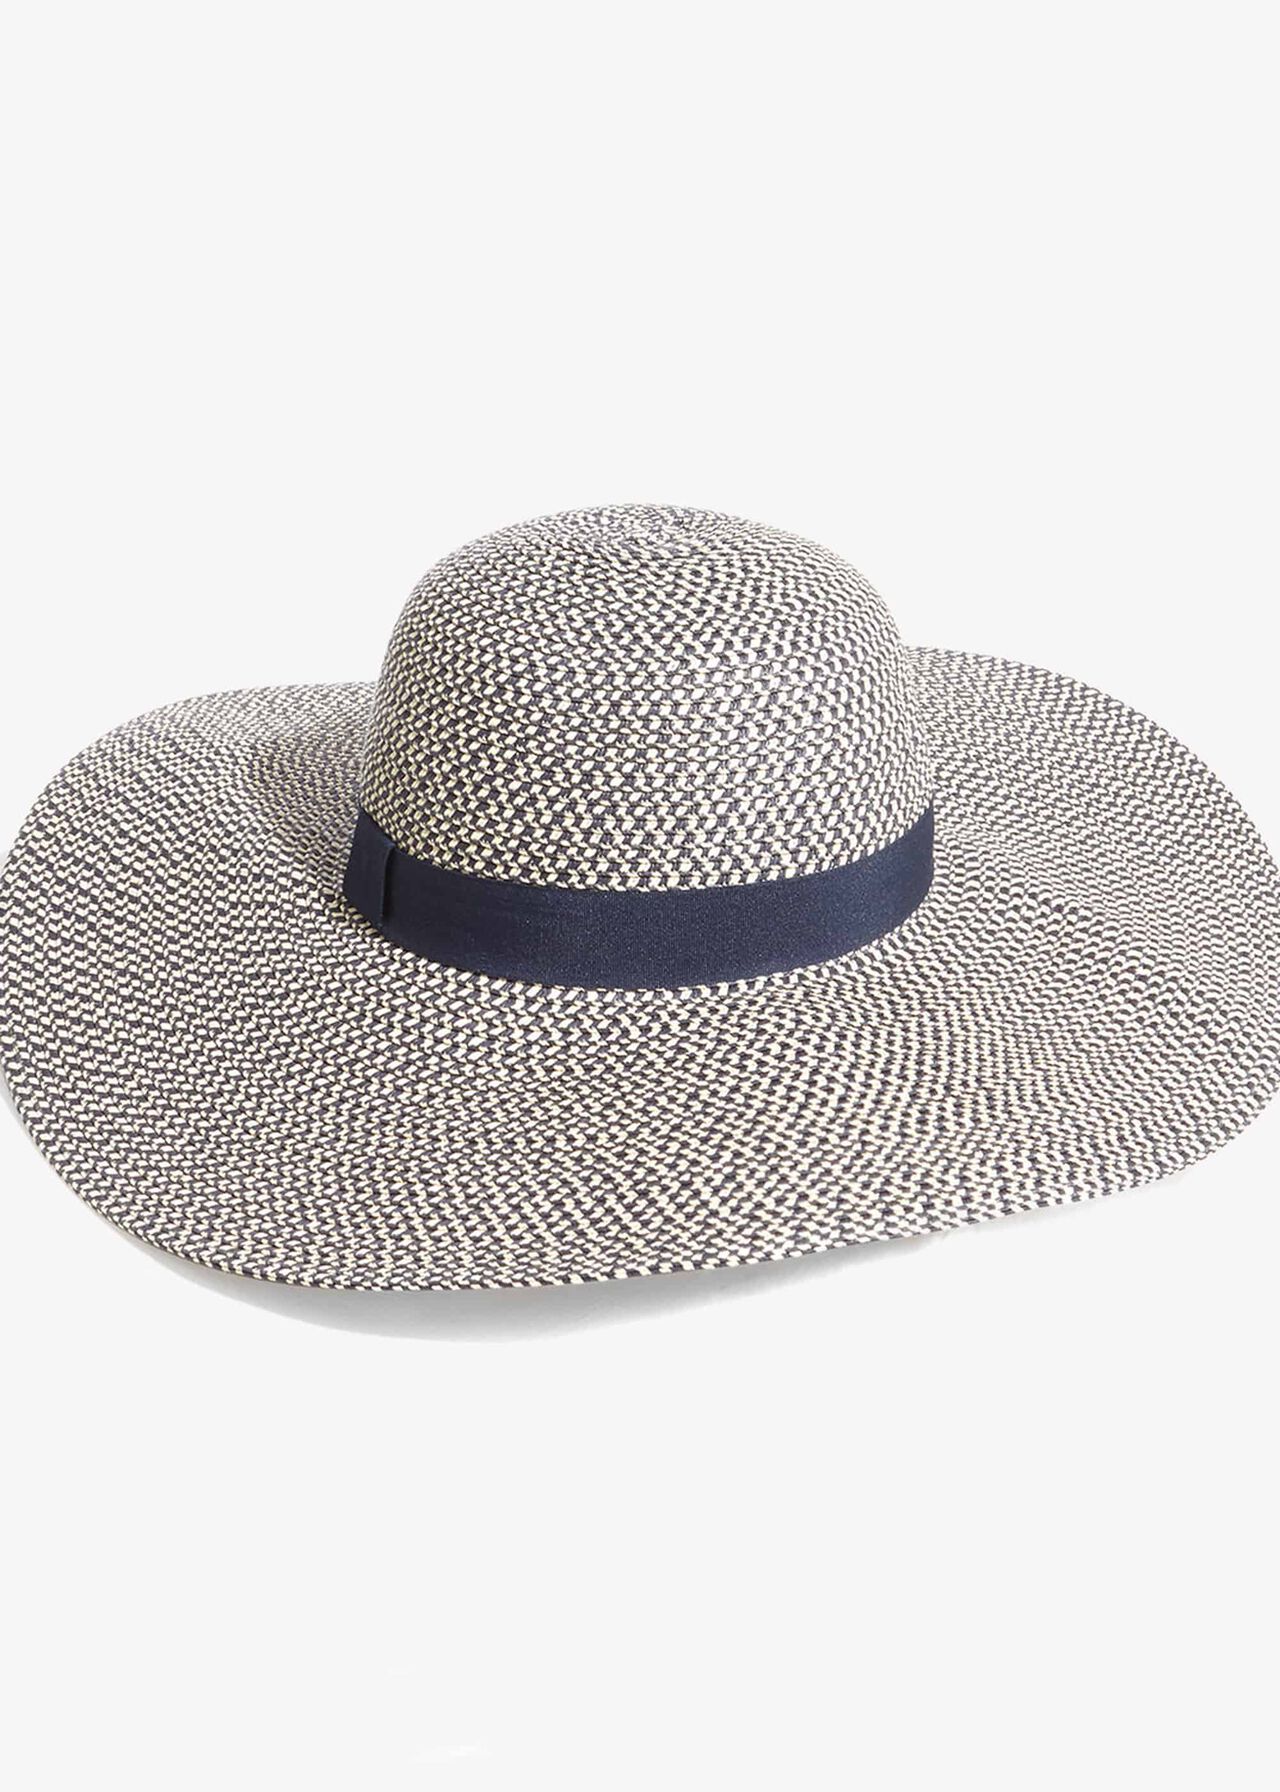 Enid Pattern Beach Hat